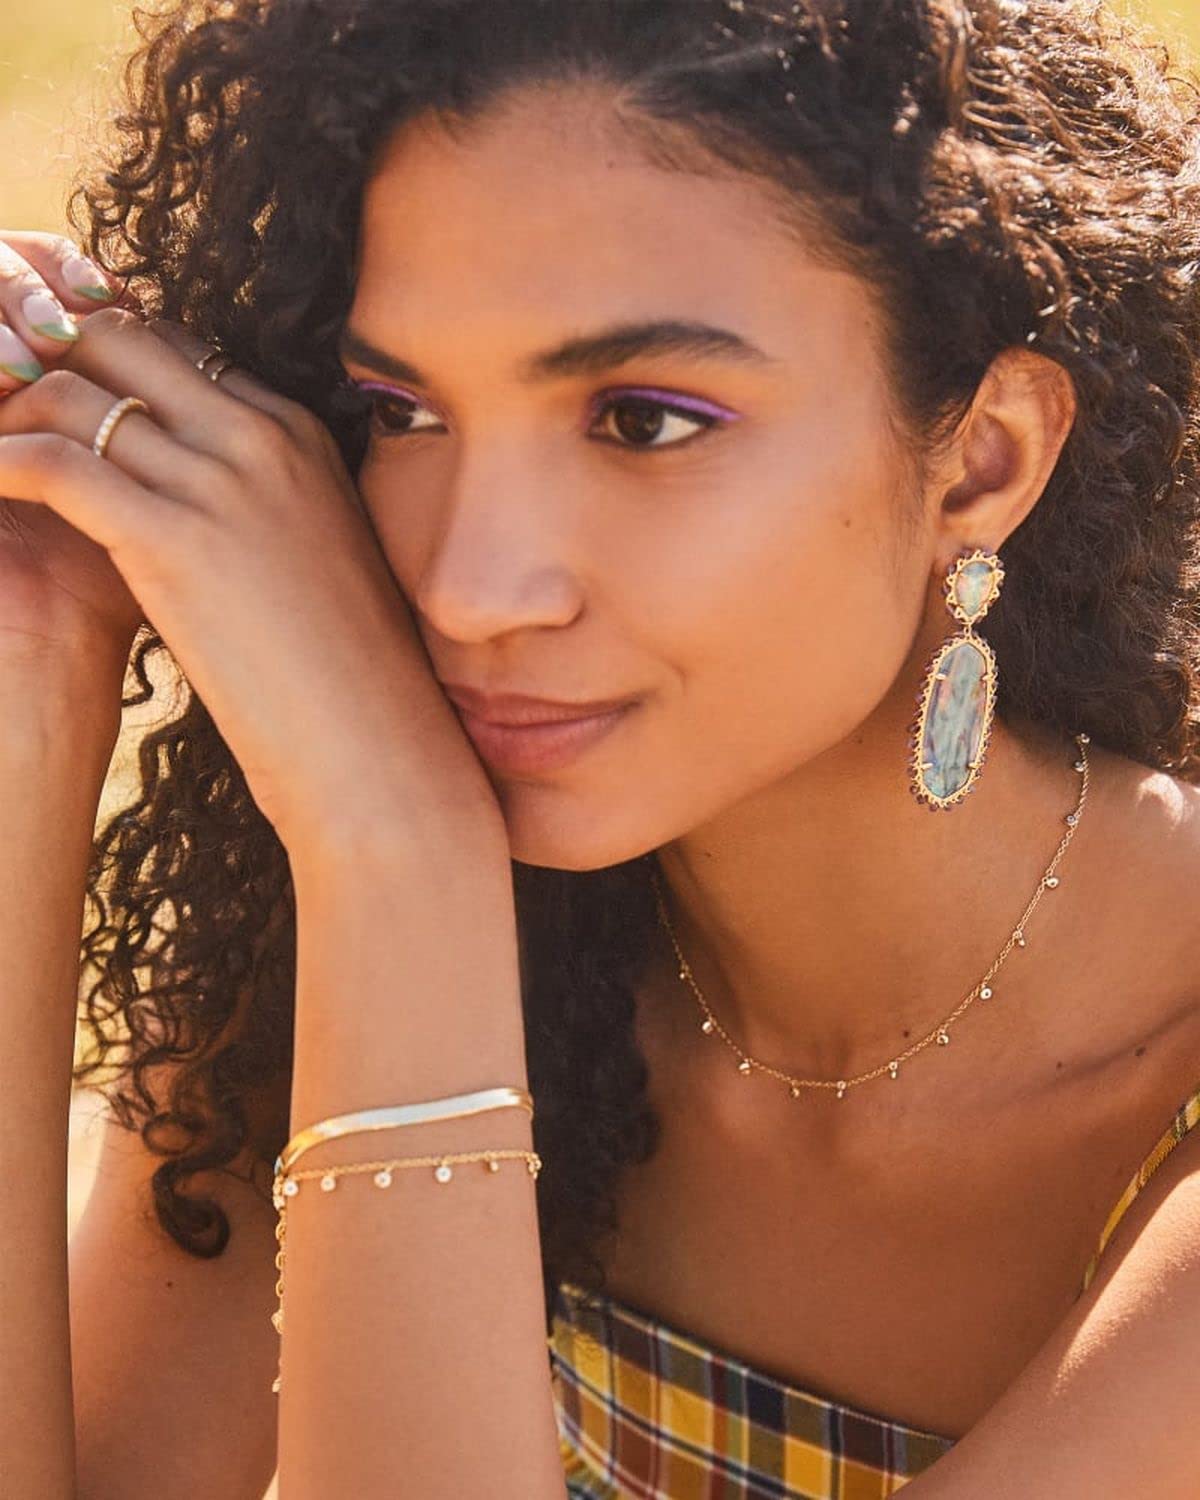 Kendra Scott Ameila Chain Necklace, Fashion Jewelry for Women